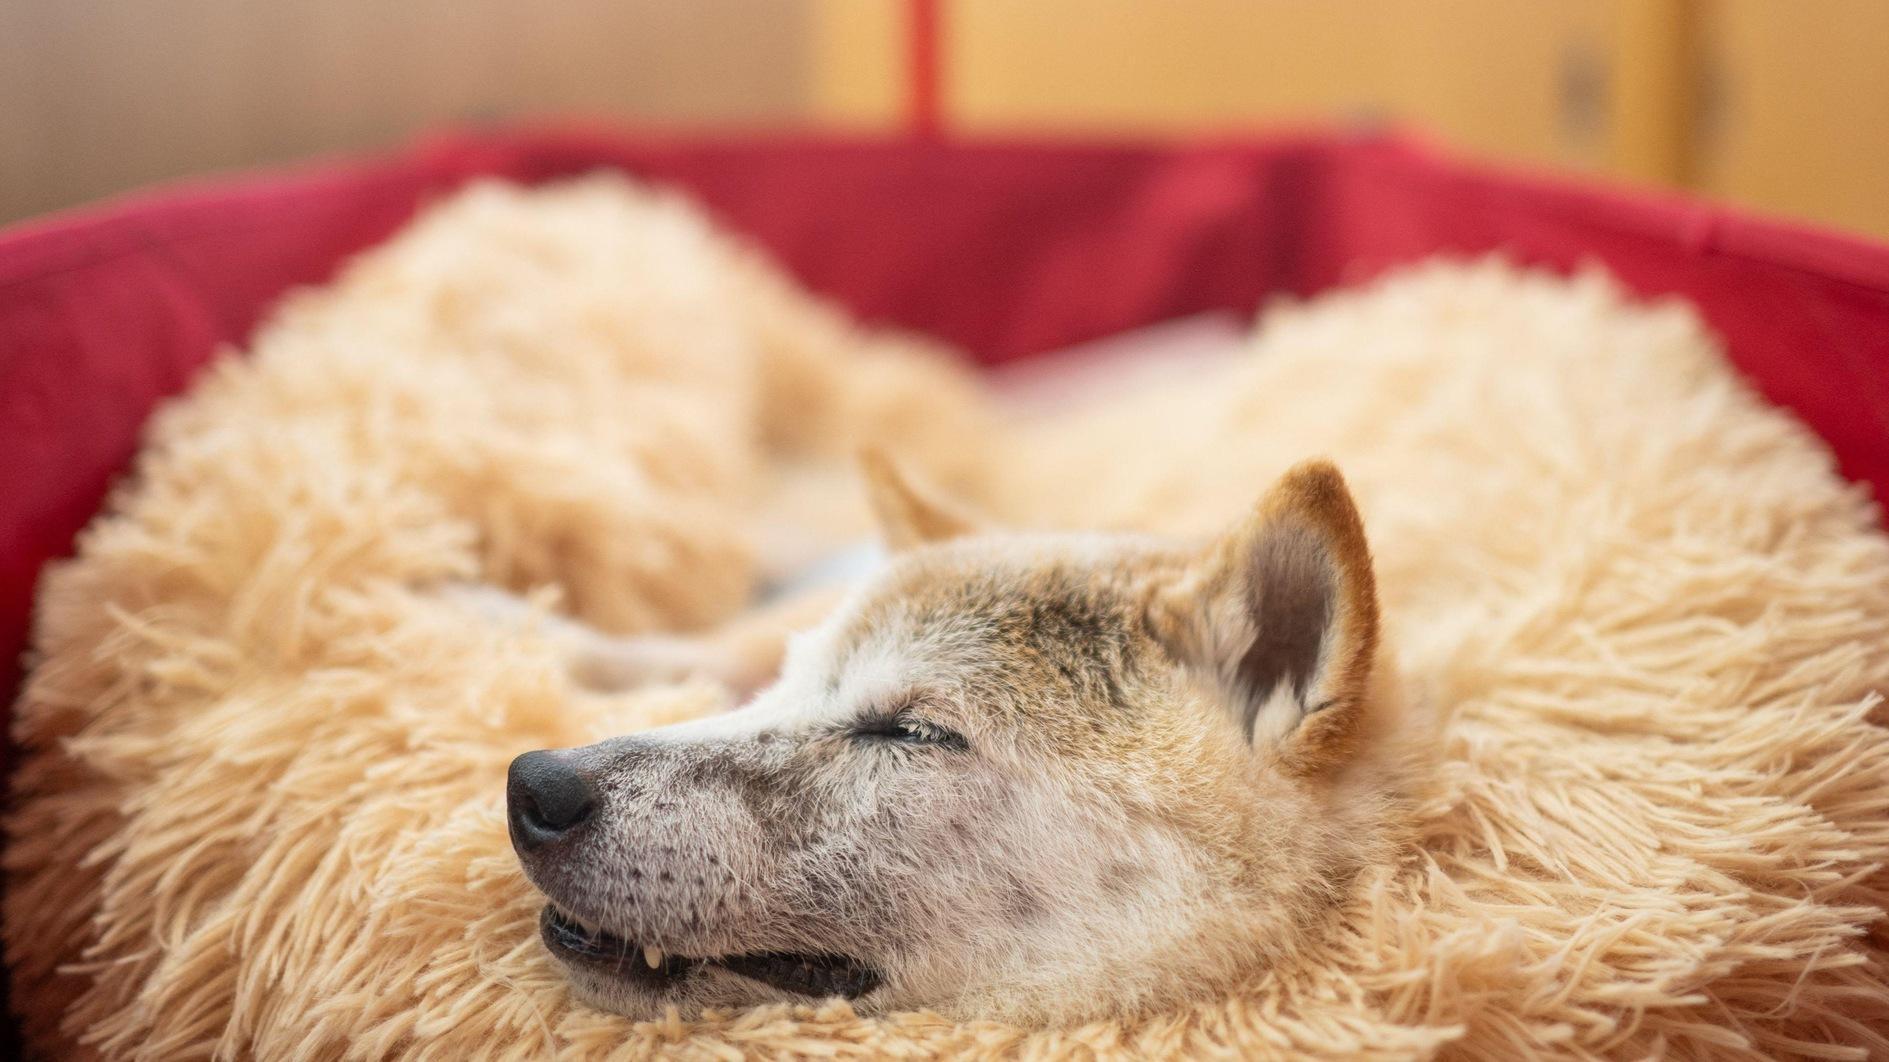 Japanse hond met de beroemde Doge-meme sterft